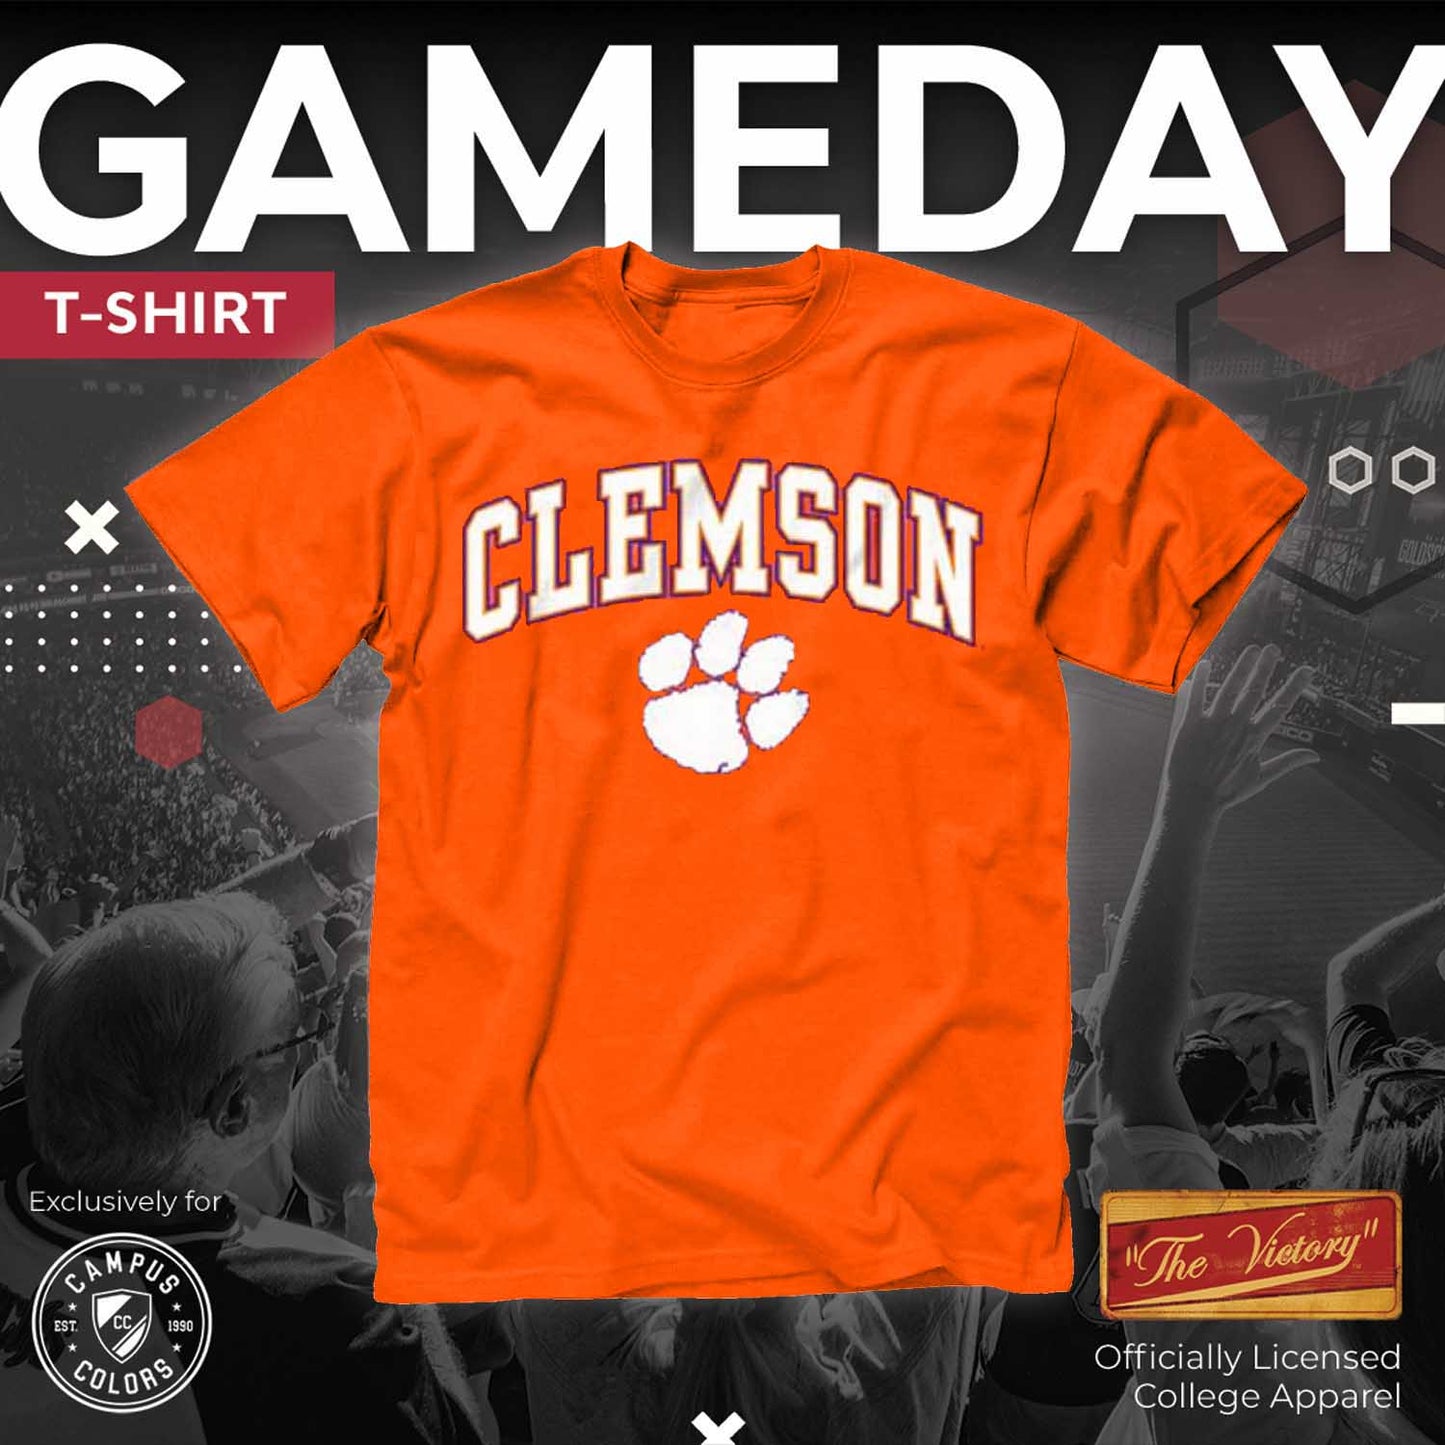 Clemson Tigers NCAA Adult Gameday Cotton T-Shirt - Orange